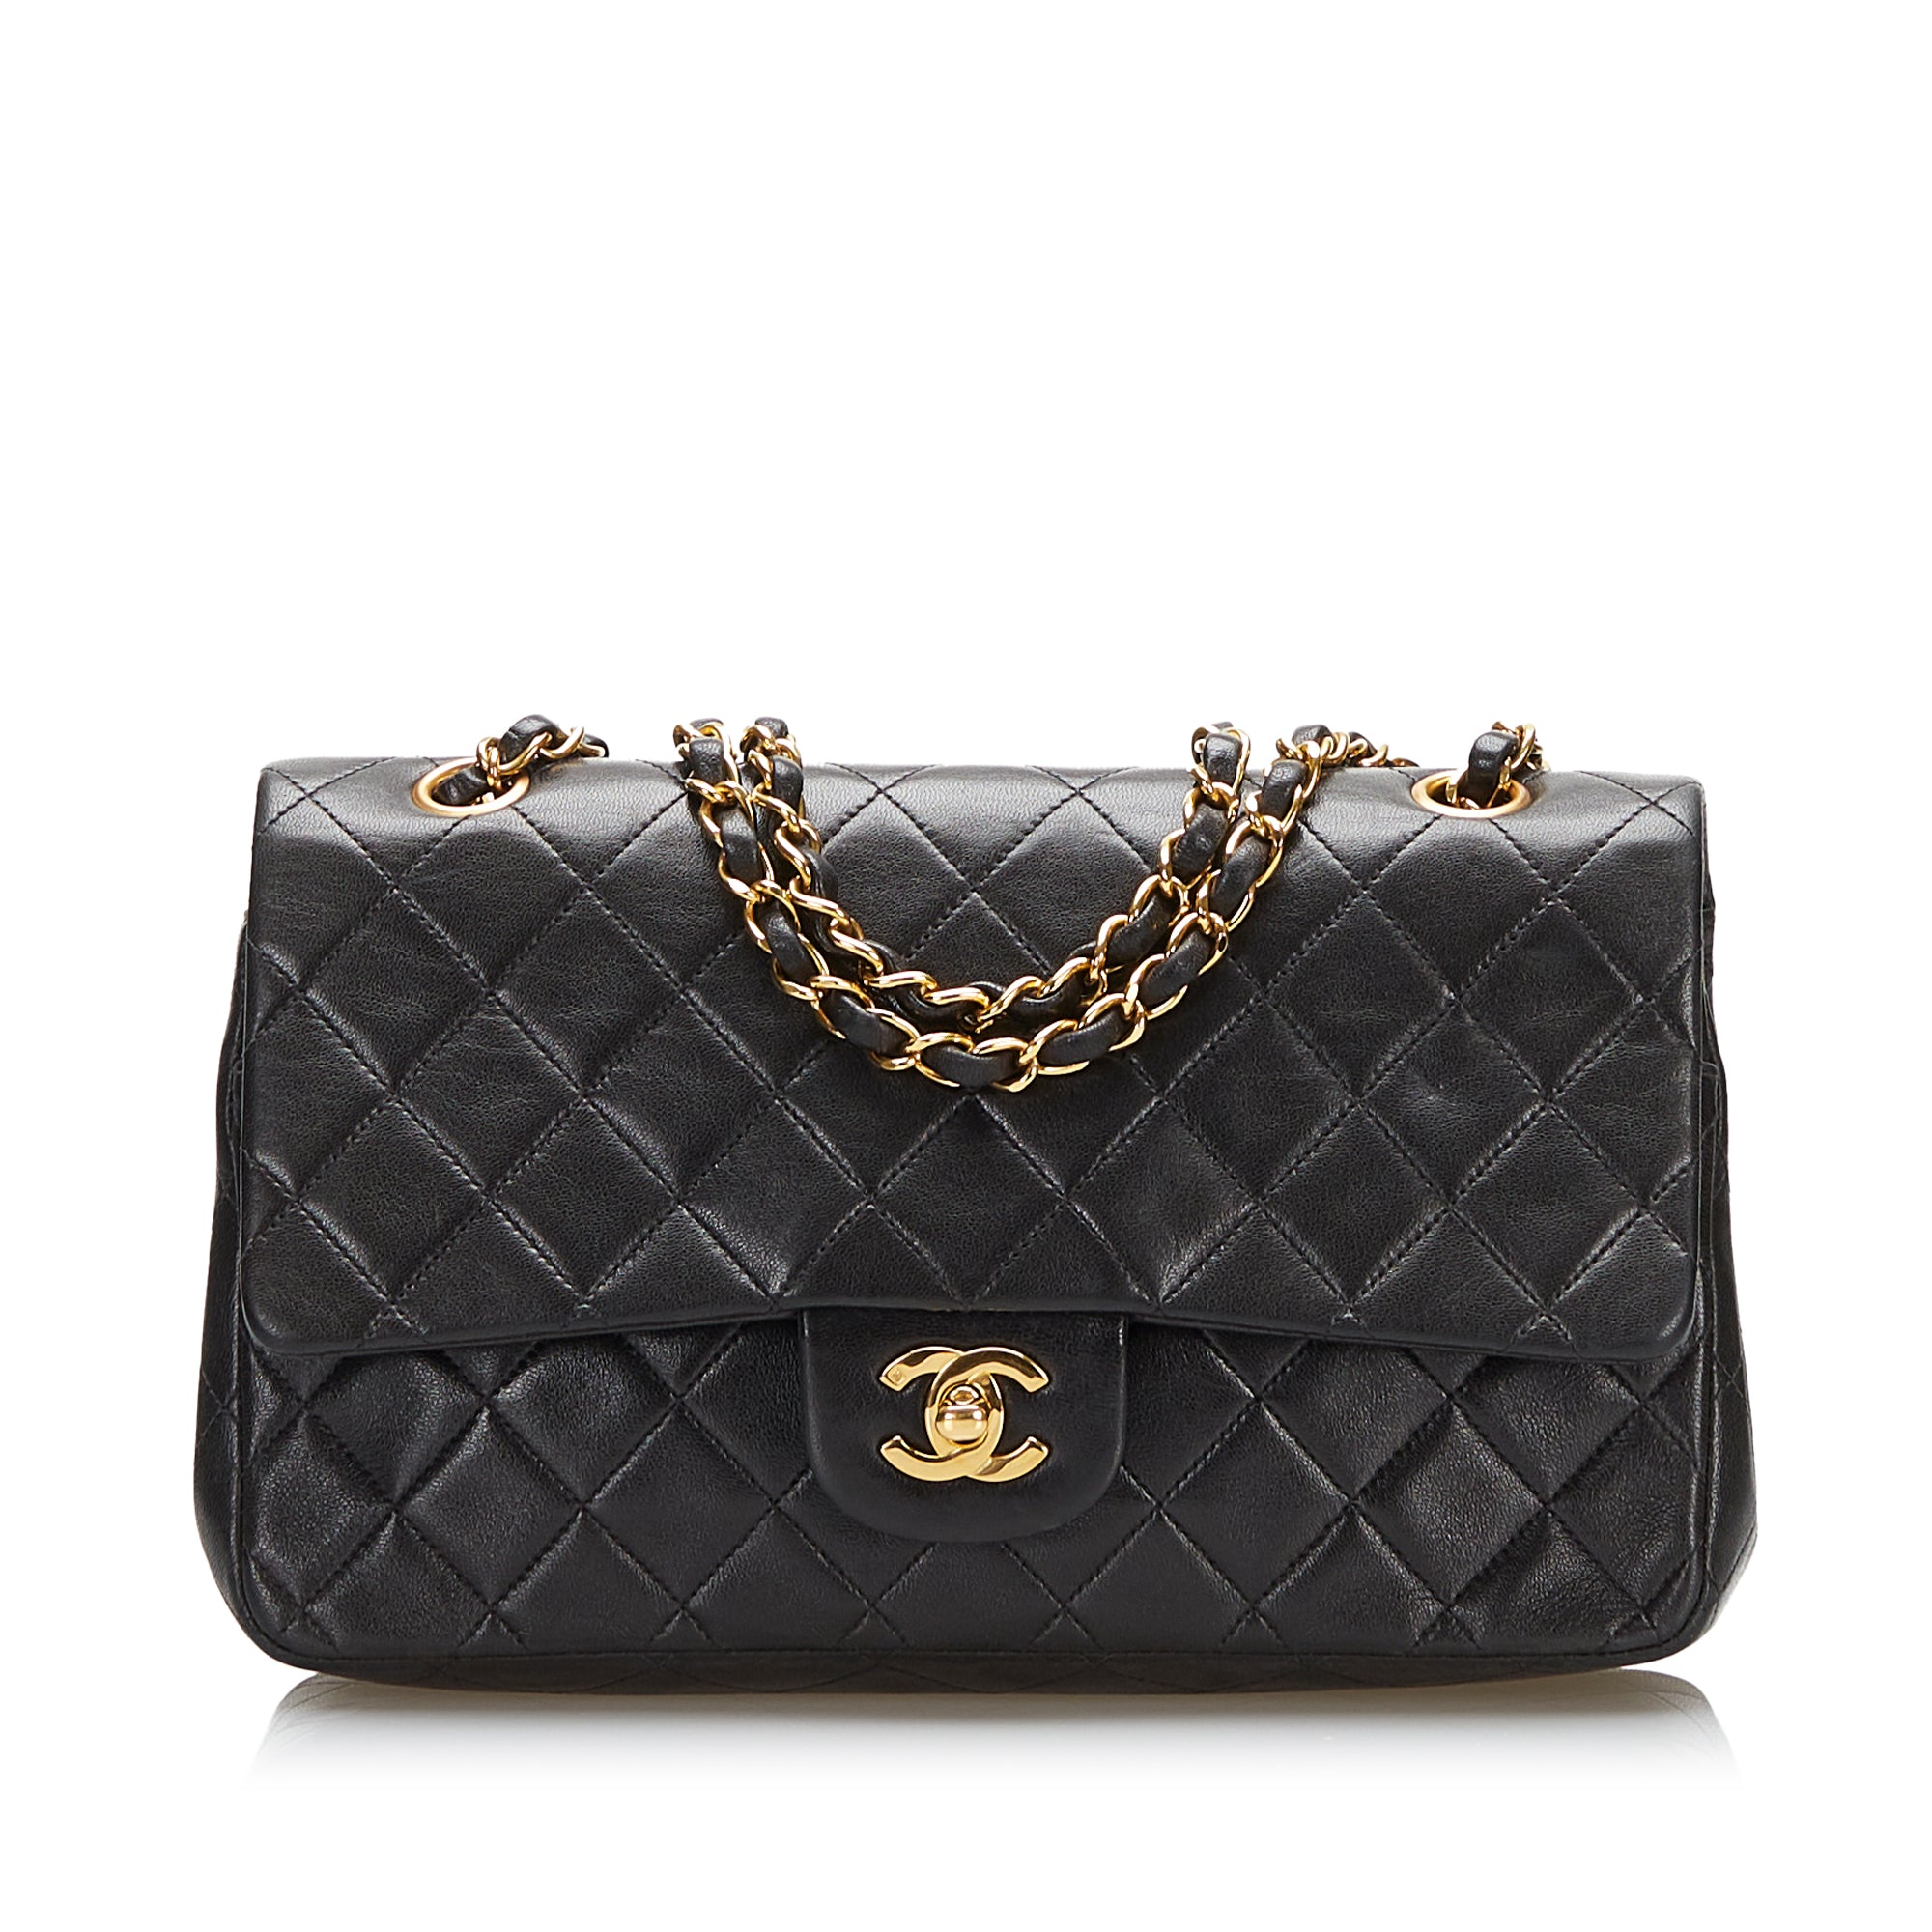 Chanel Classic Flap Bag Shoulder White Sg Hardware Caviar Skin